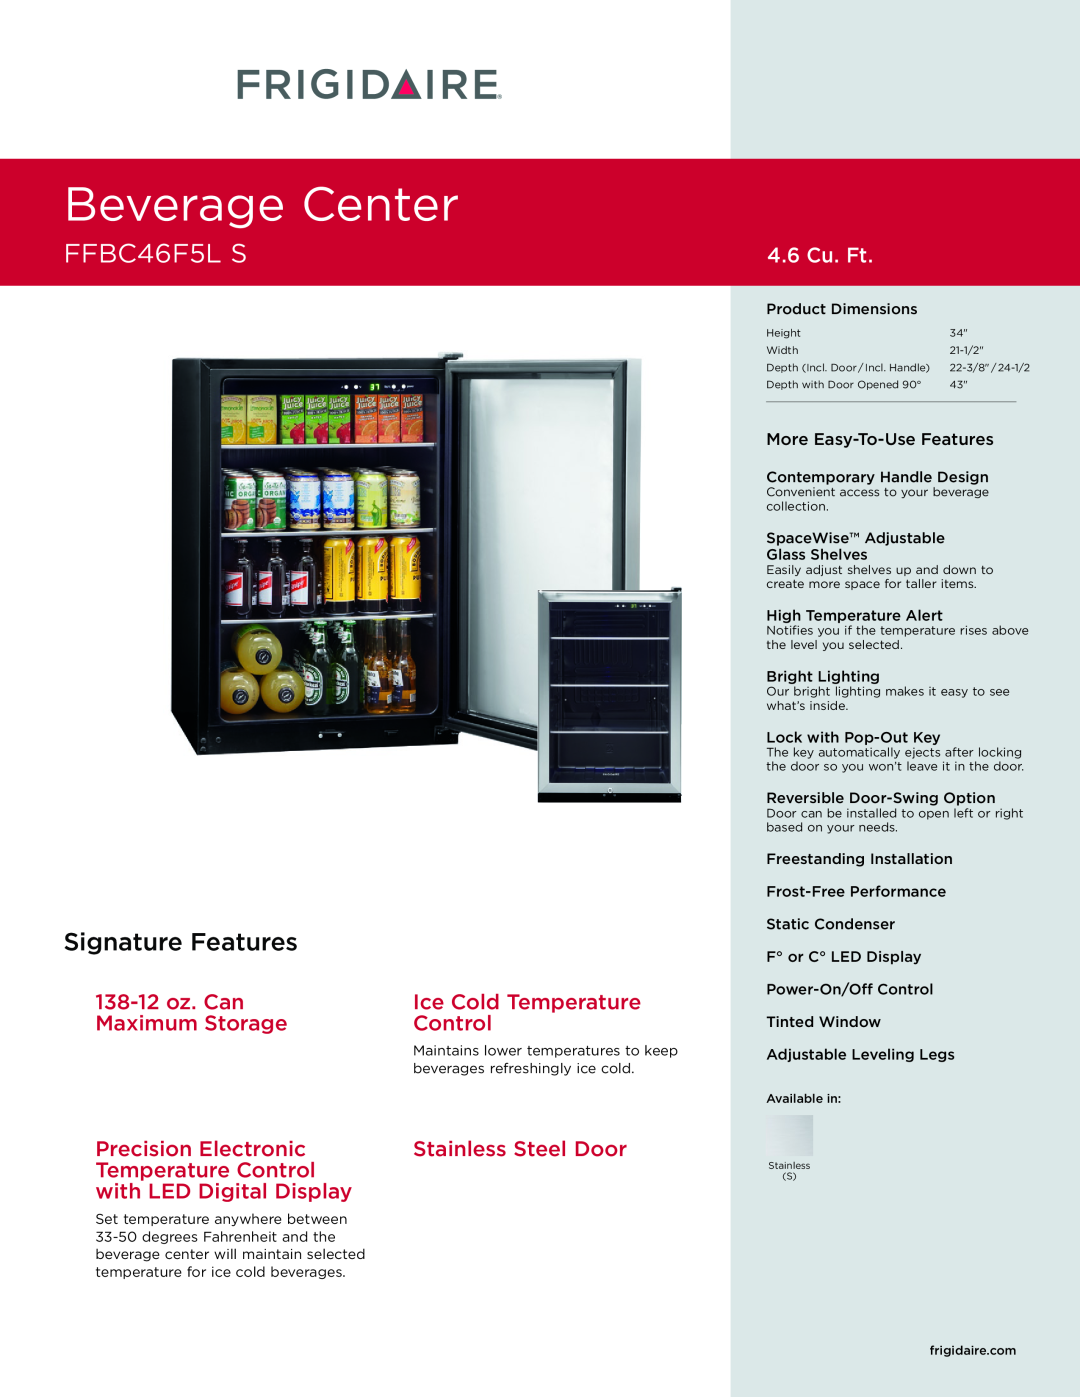 Frigidaire FFBC46F5L S dimensions Beverage Center, Signature Features, 138-12oz. Can, Ice Cold Temperature, Control 